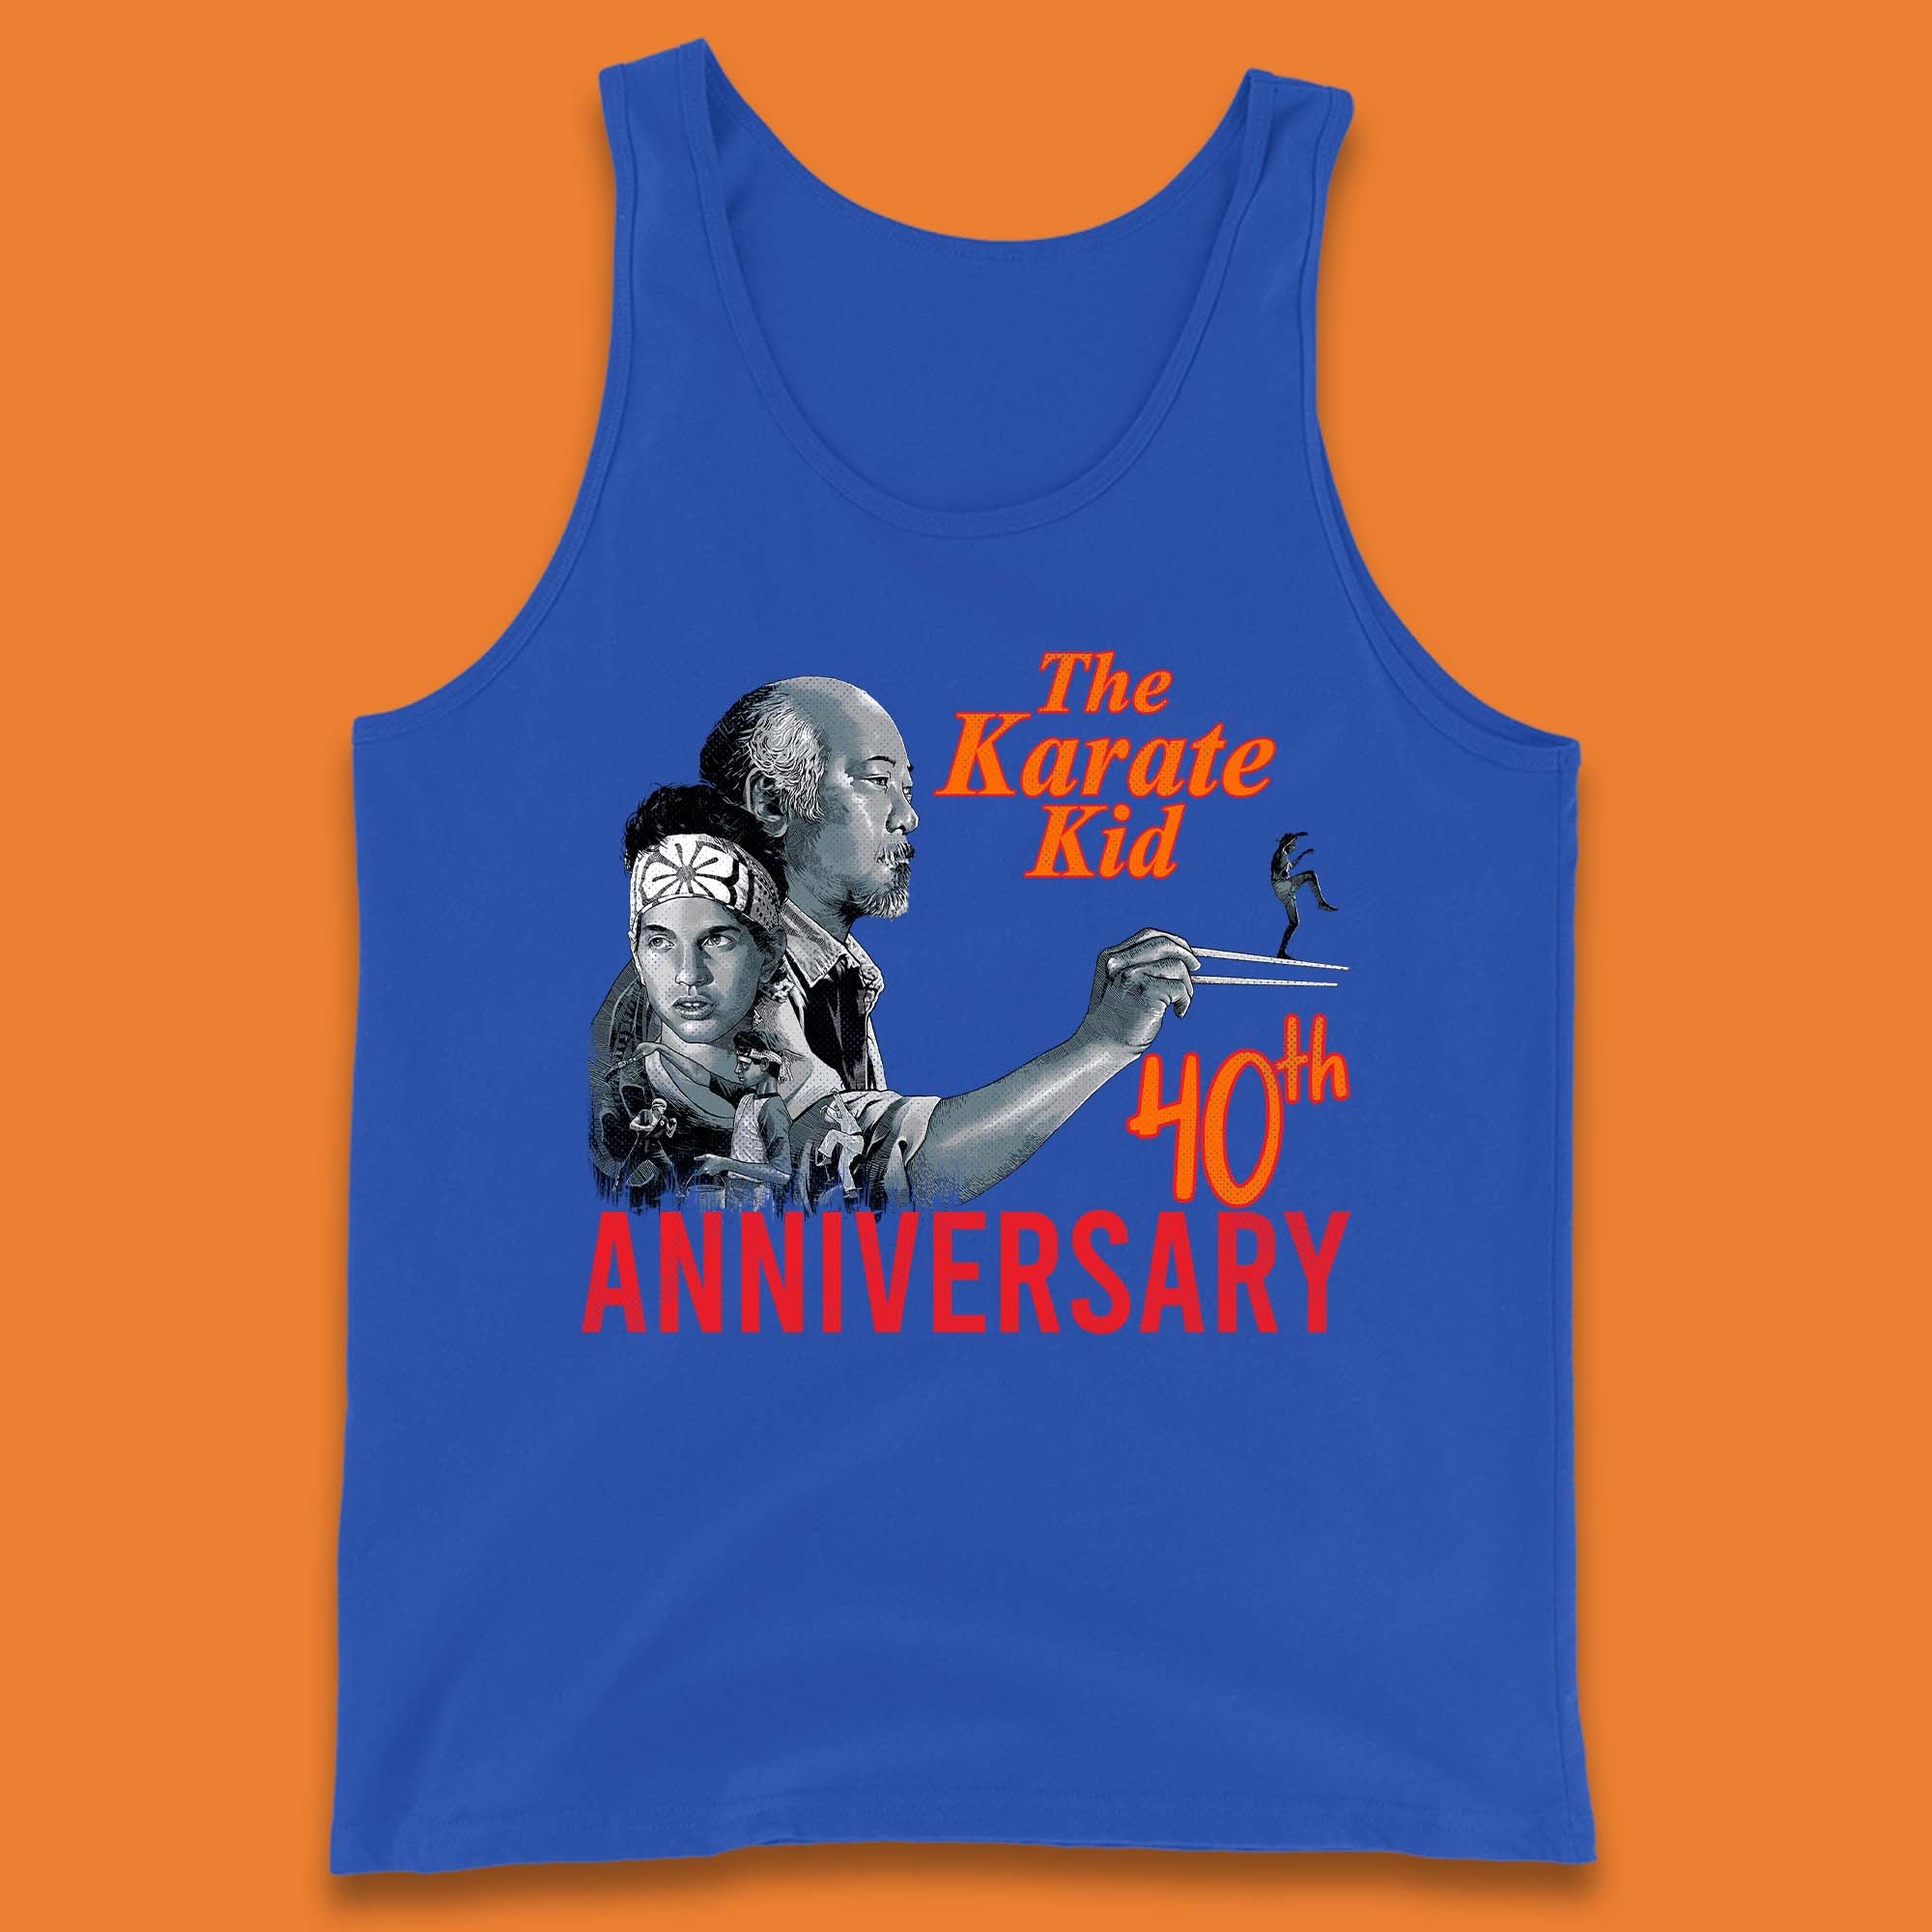 The Karate Kid 40th Anniversary Tank Top